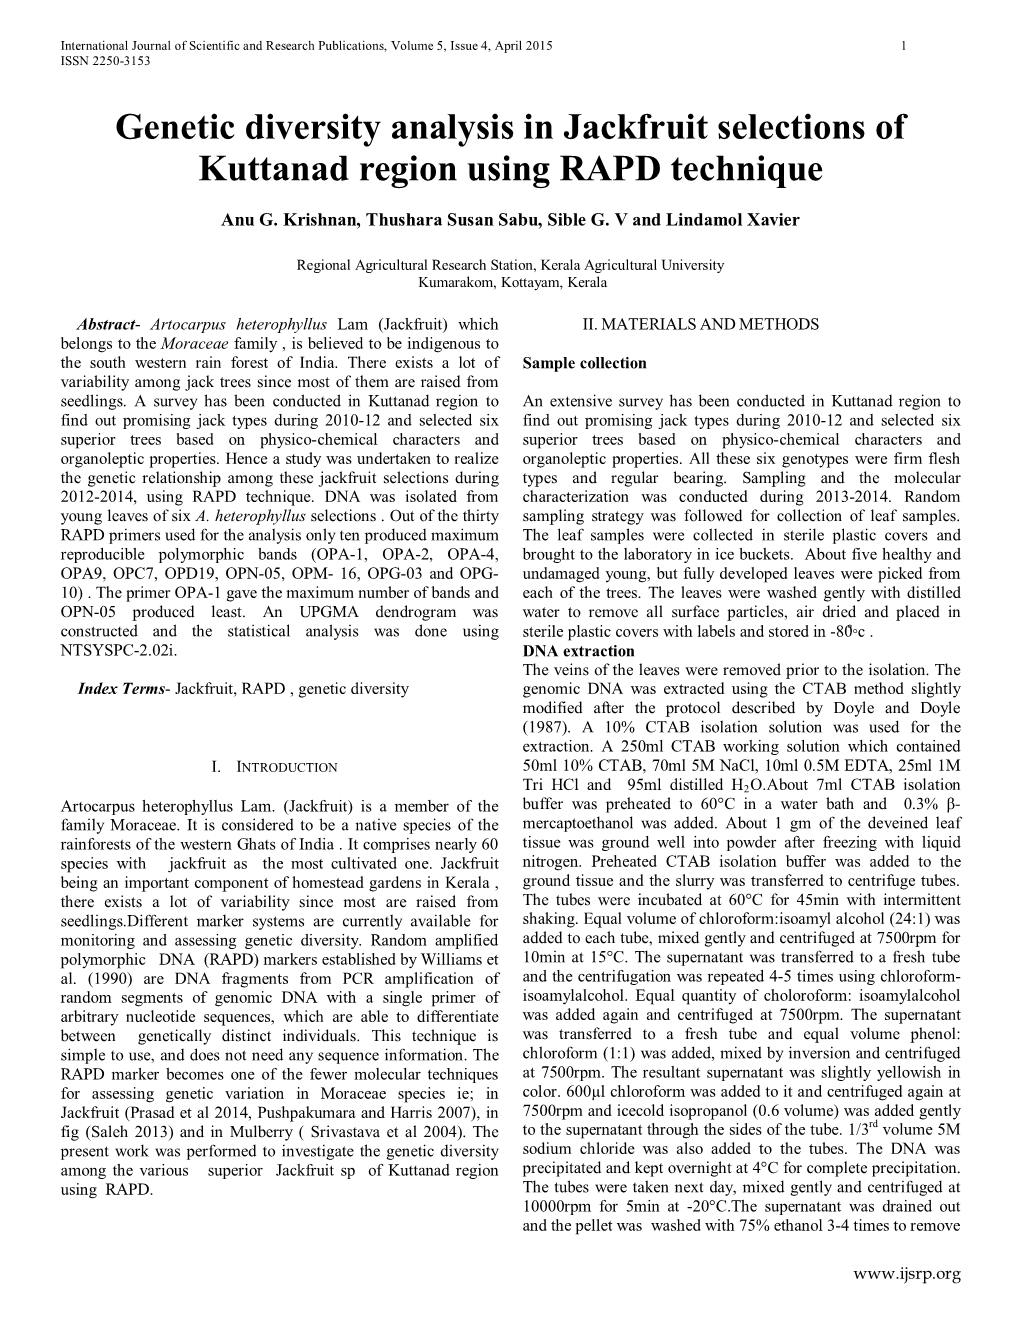 Genetic Diversity Analysis in Jackfruit Selections of Kuttanad Region Using RAPD Technique